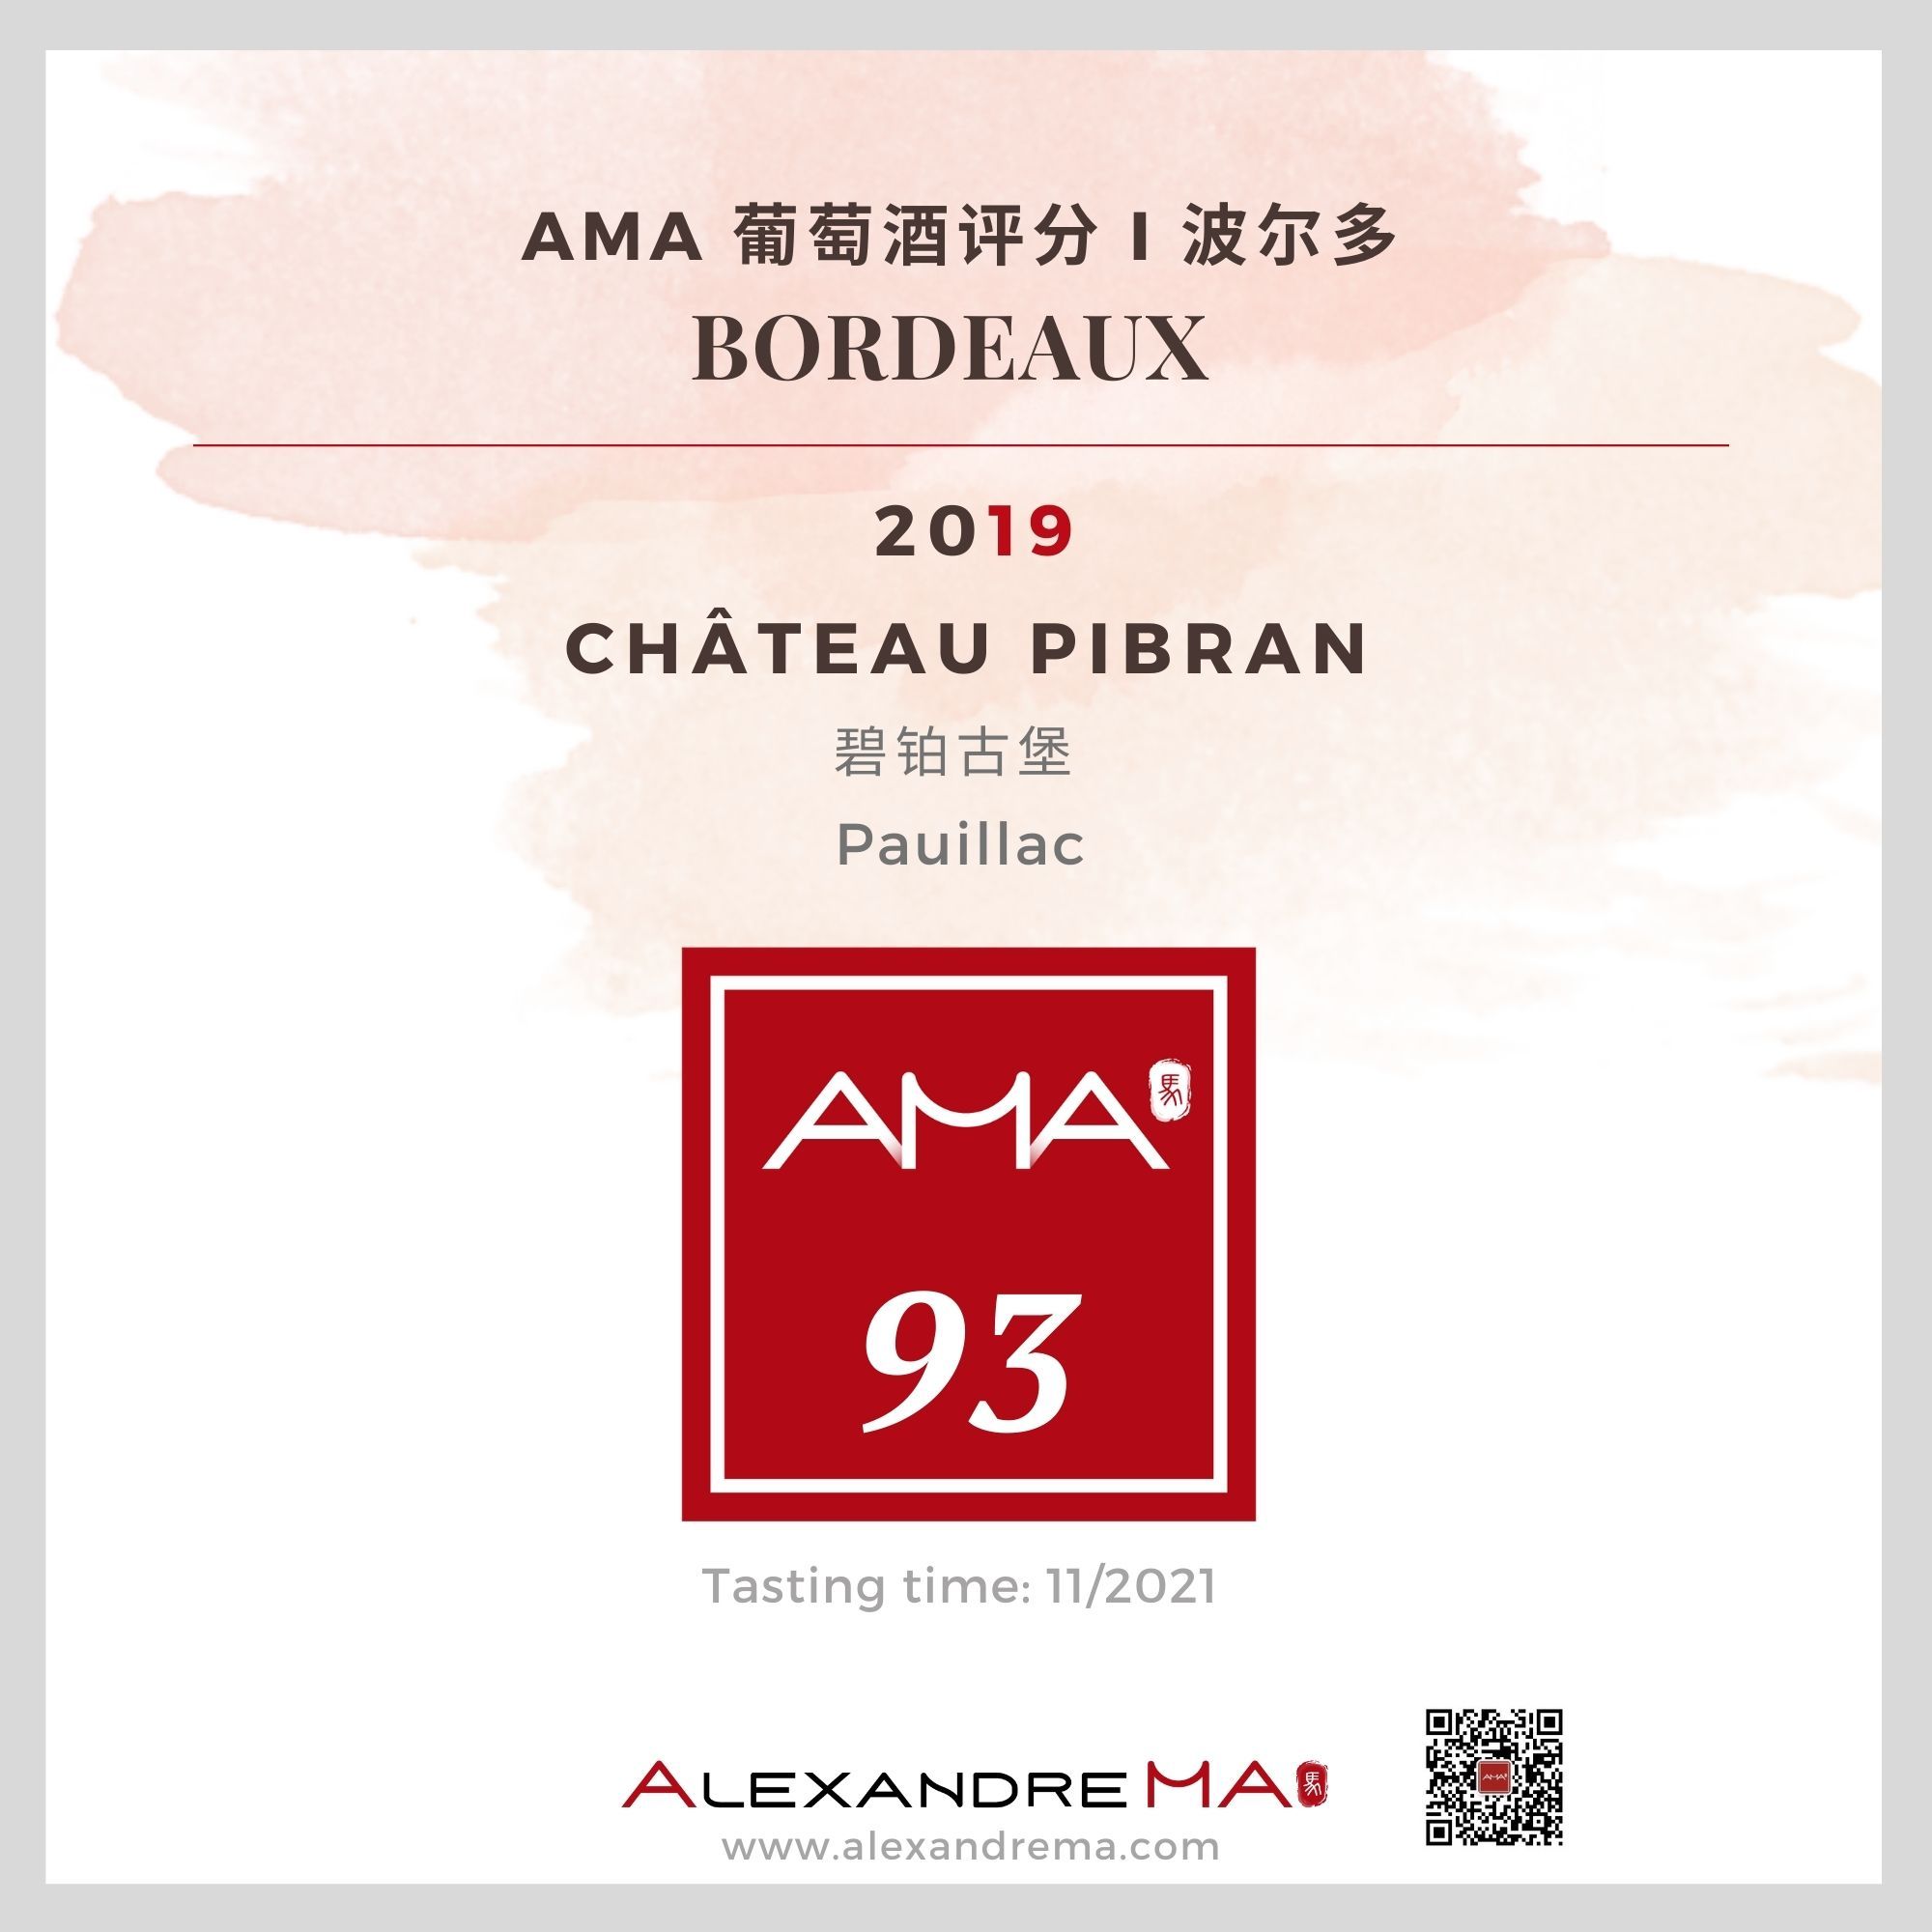 Château Pibran 2019 碧铂古堡 - Alexandre Ma